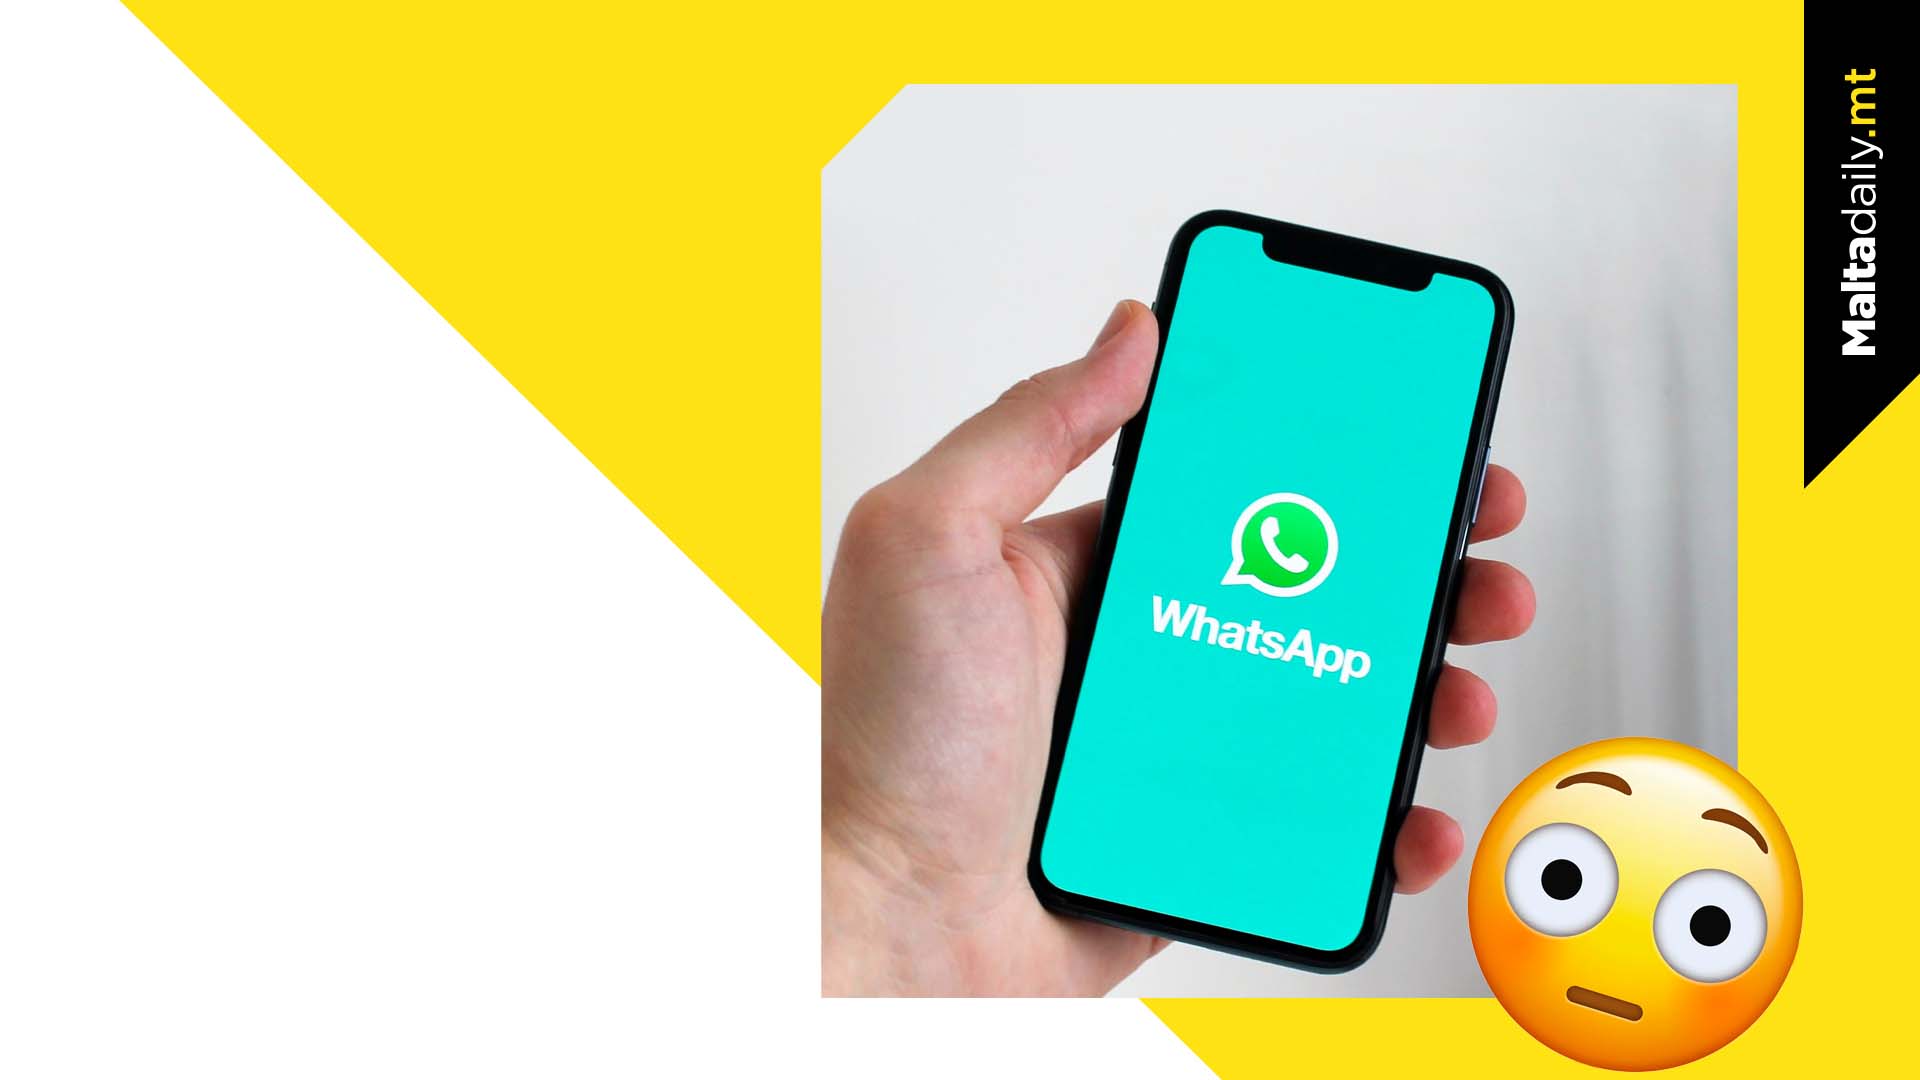 META Denies WhatsApp Will Be Including Ads